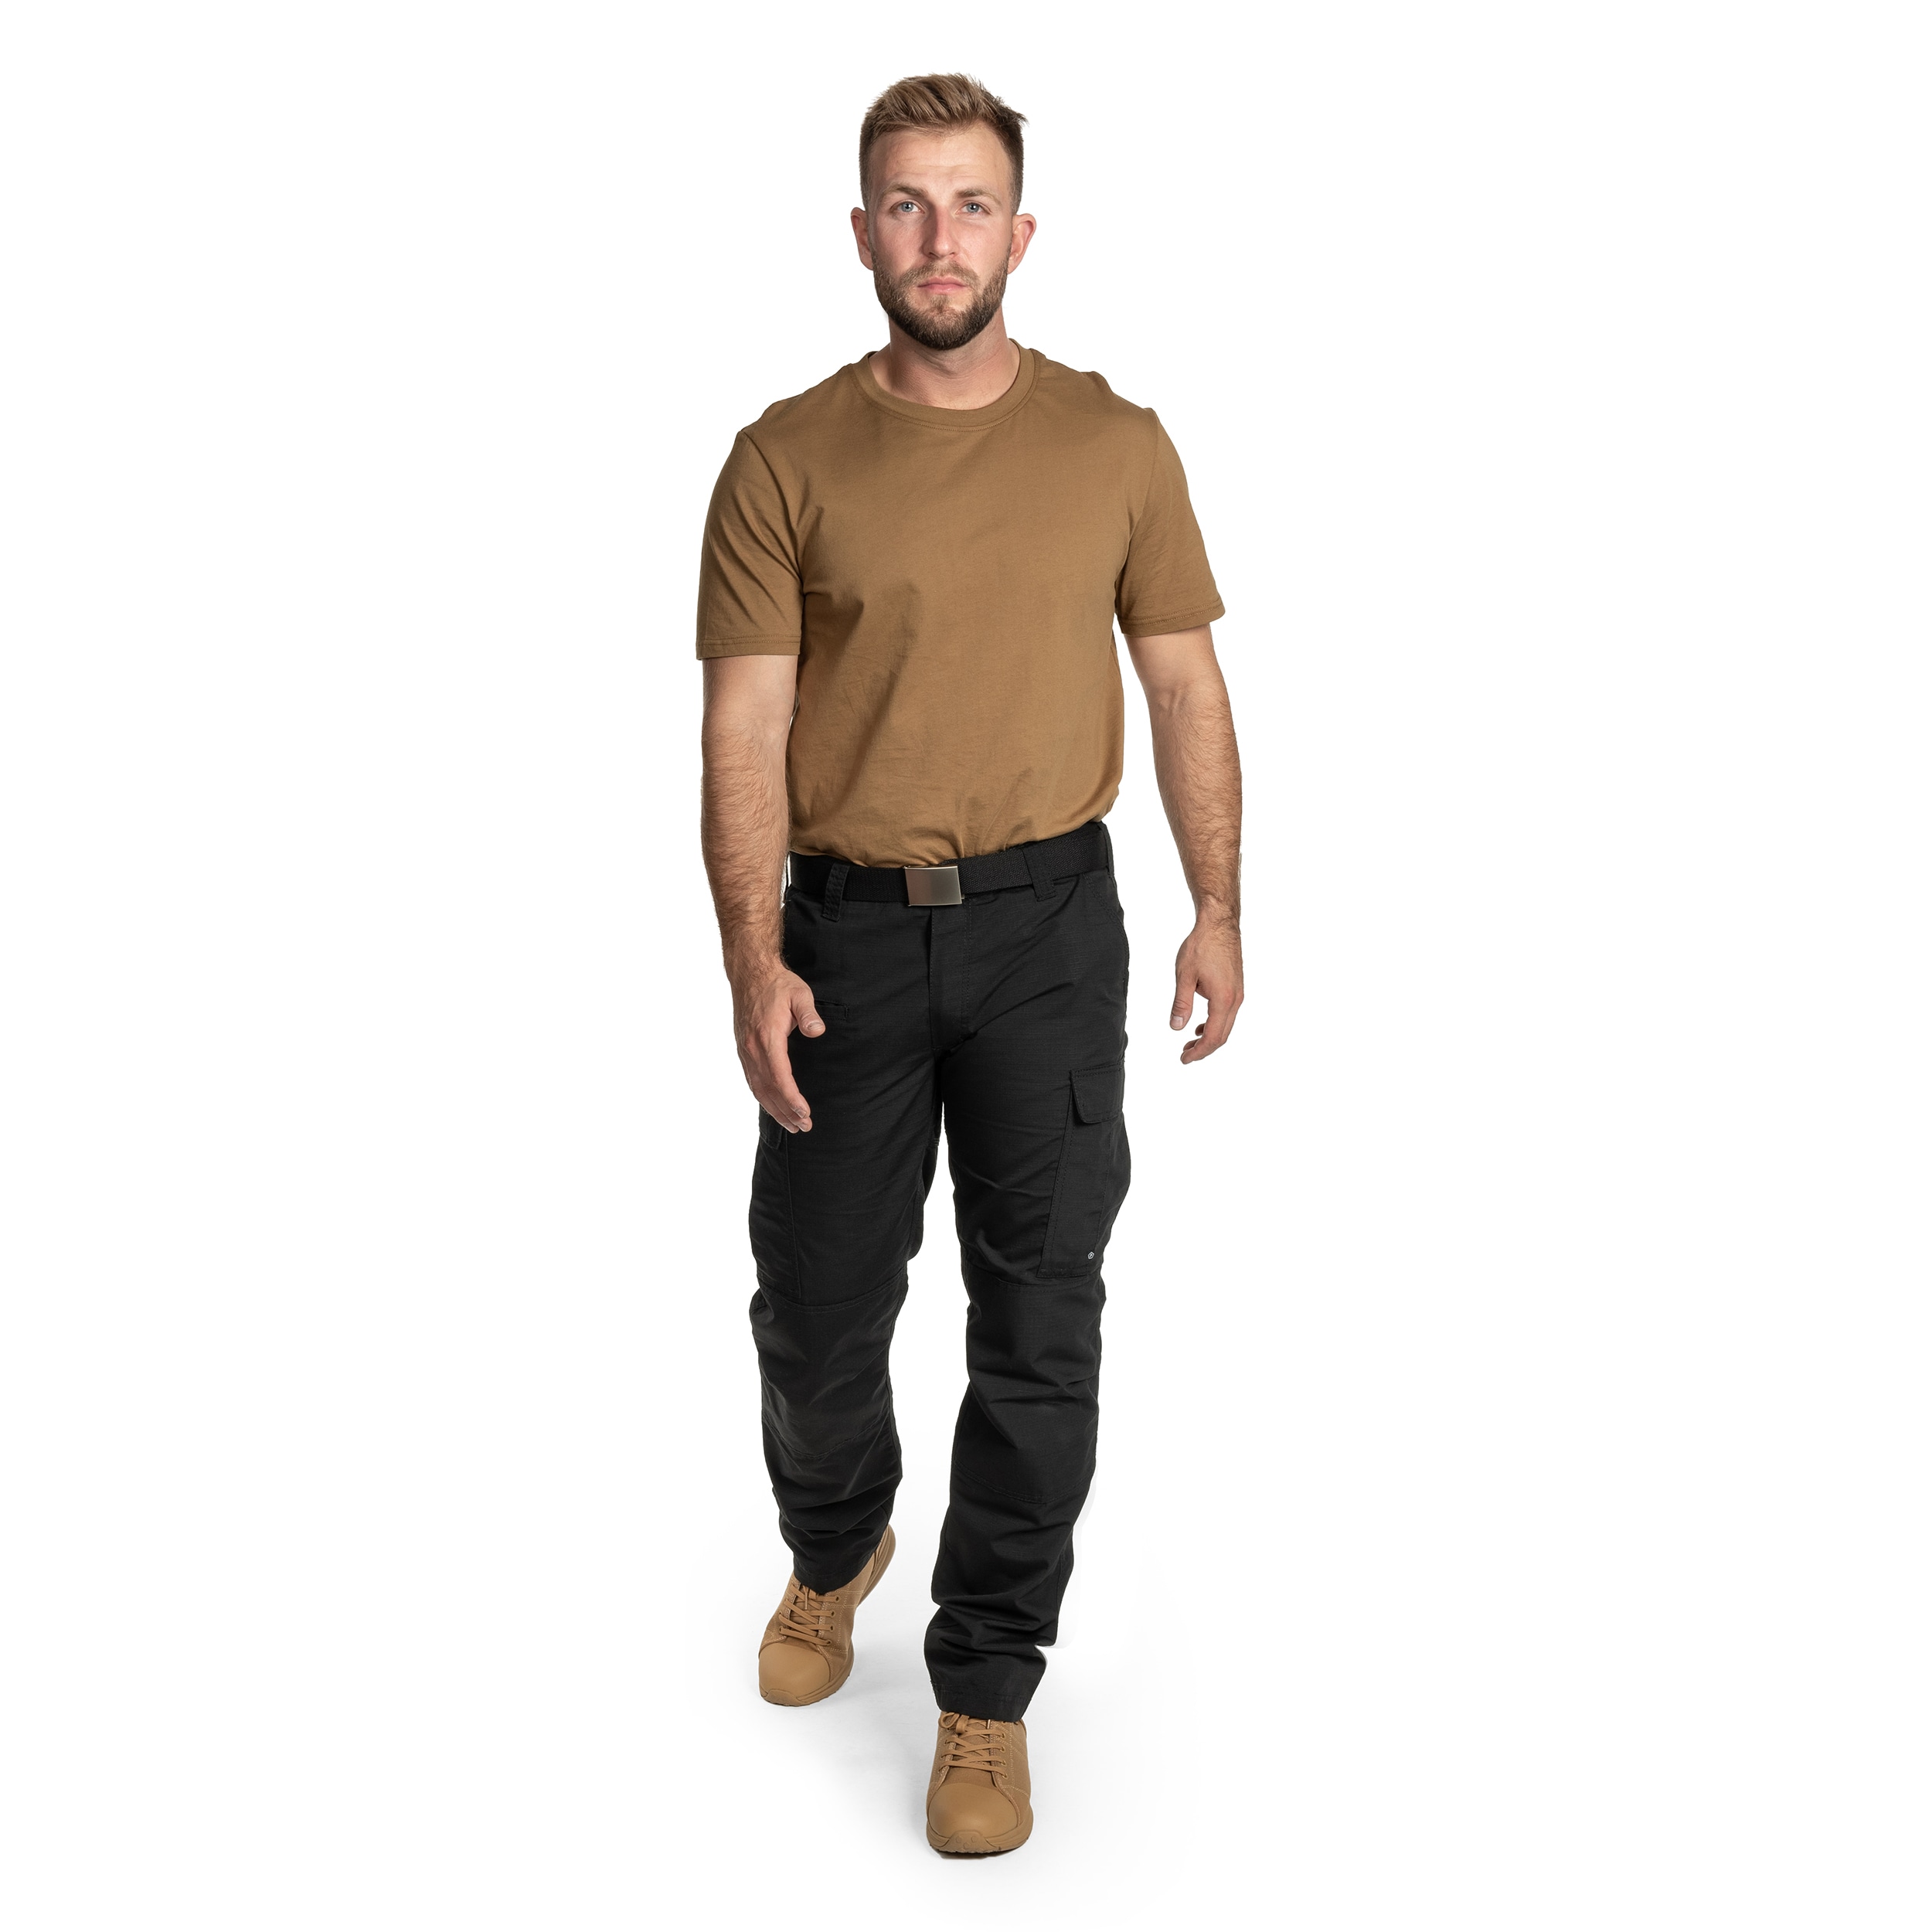 Spodnie wojskowe Pentagon BDU 2.0 - Black